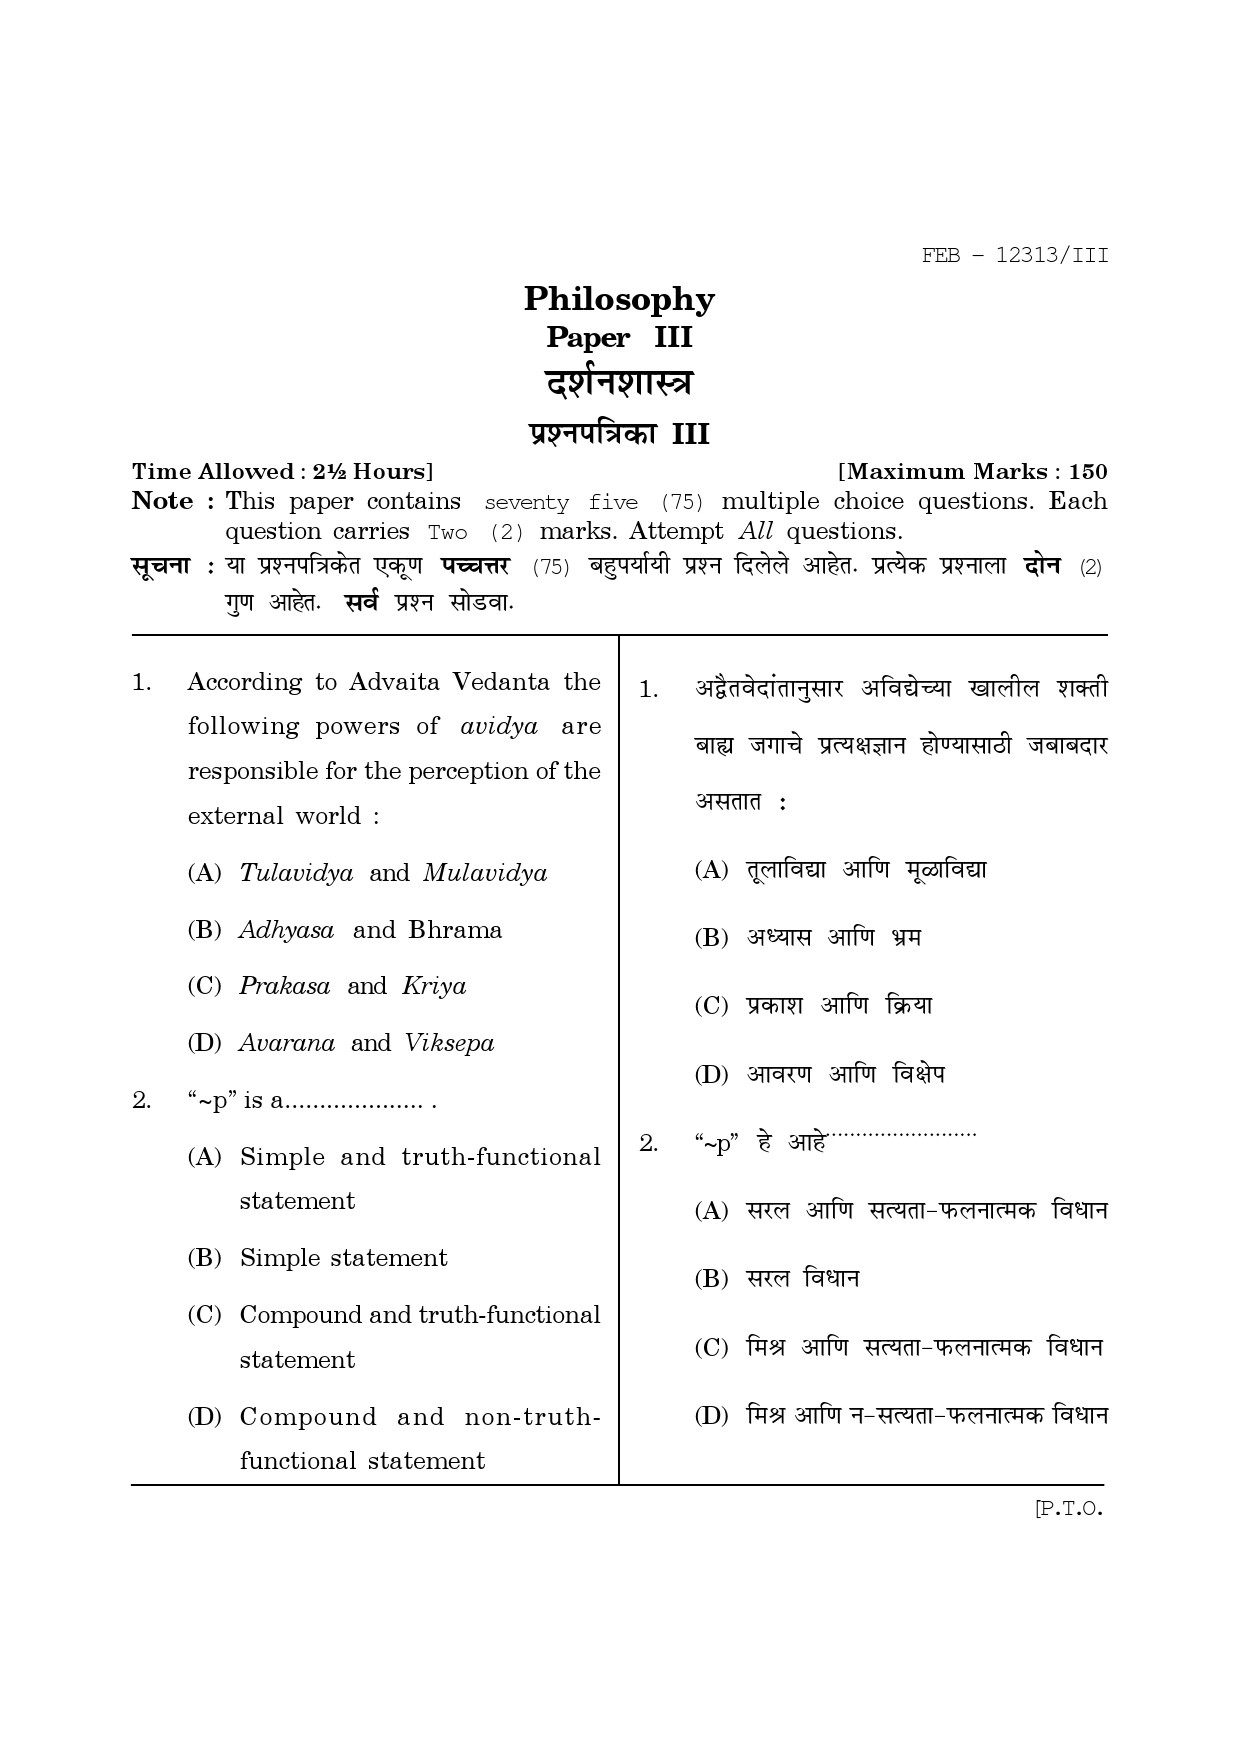 Maharashtra SET Philosophy Question Paper III February 2013 1